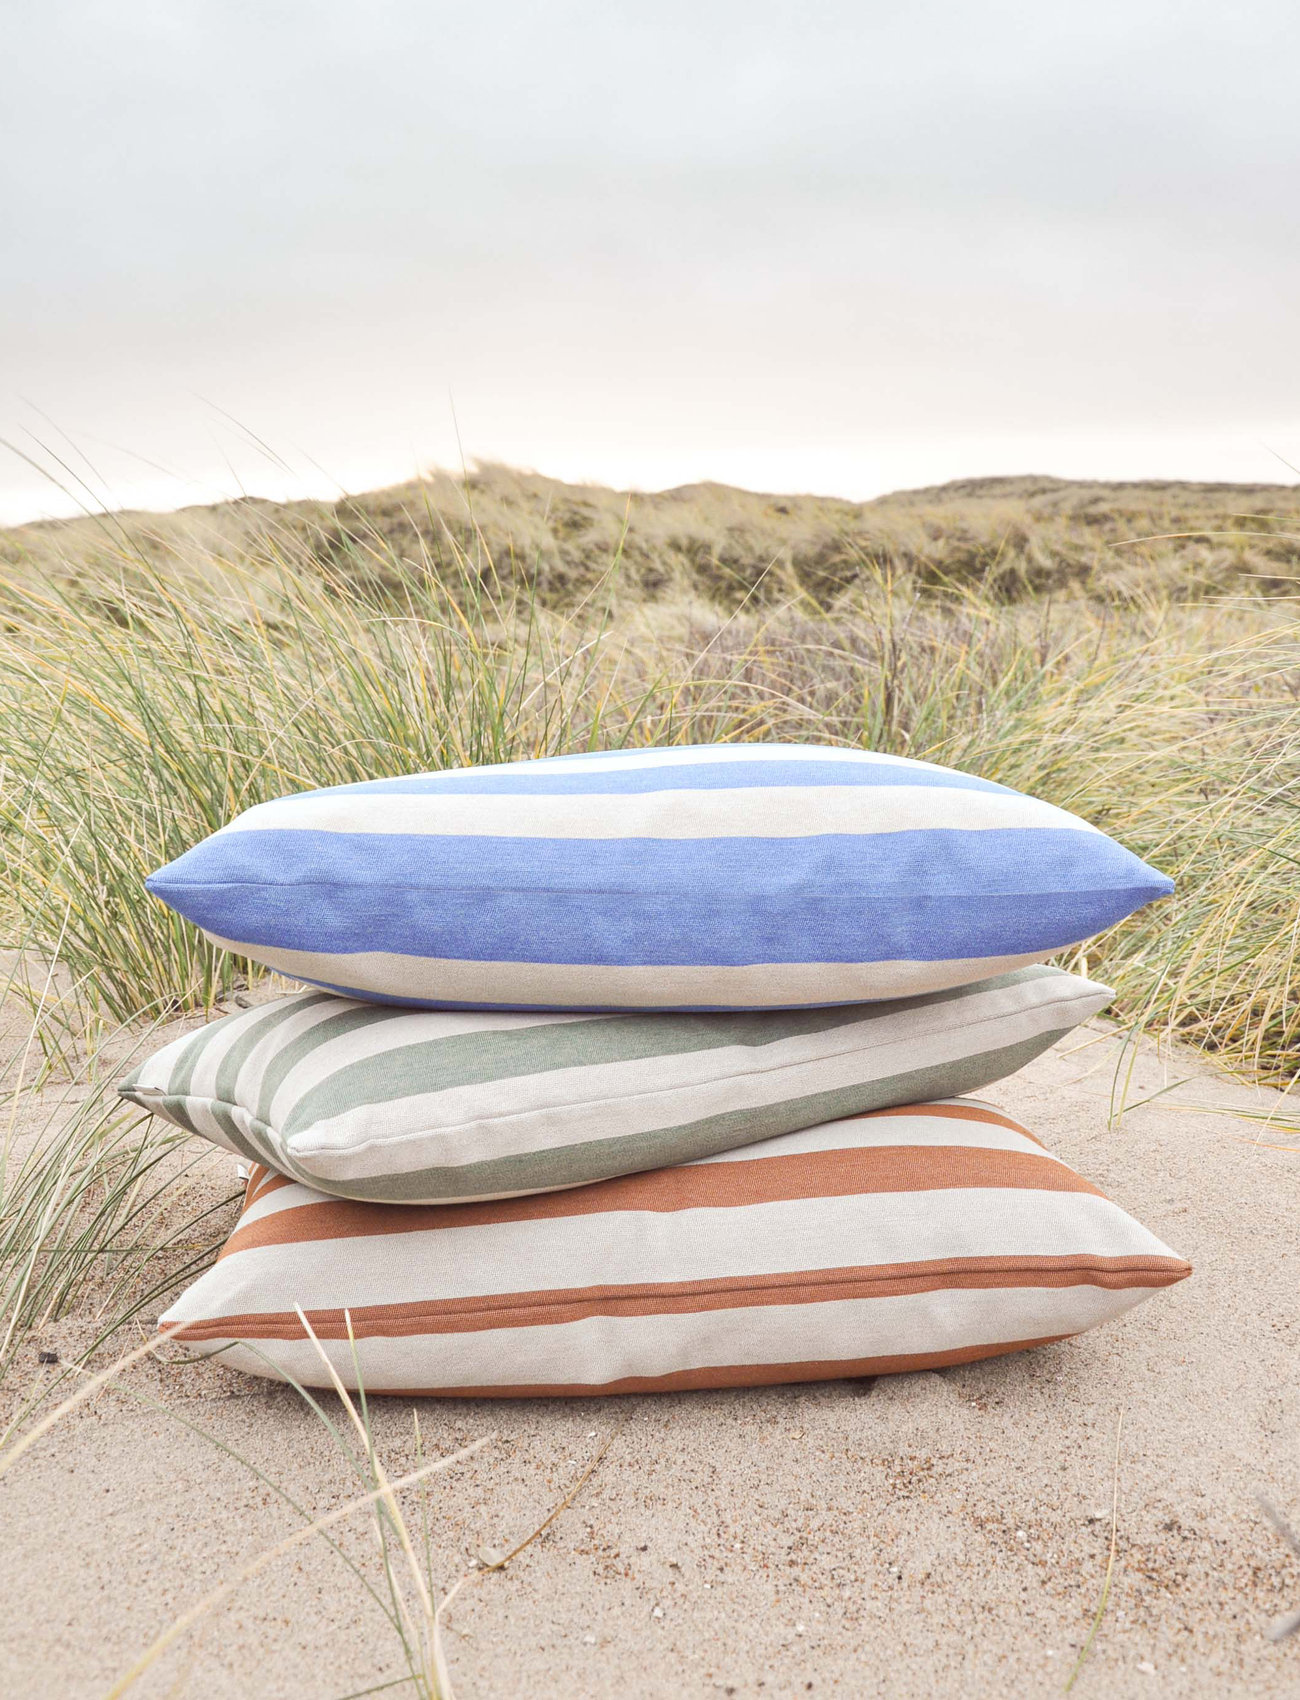 compliments - Outdoor Stripe Cushion - padjad - blue - 1